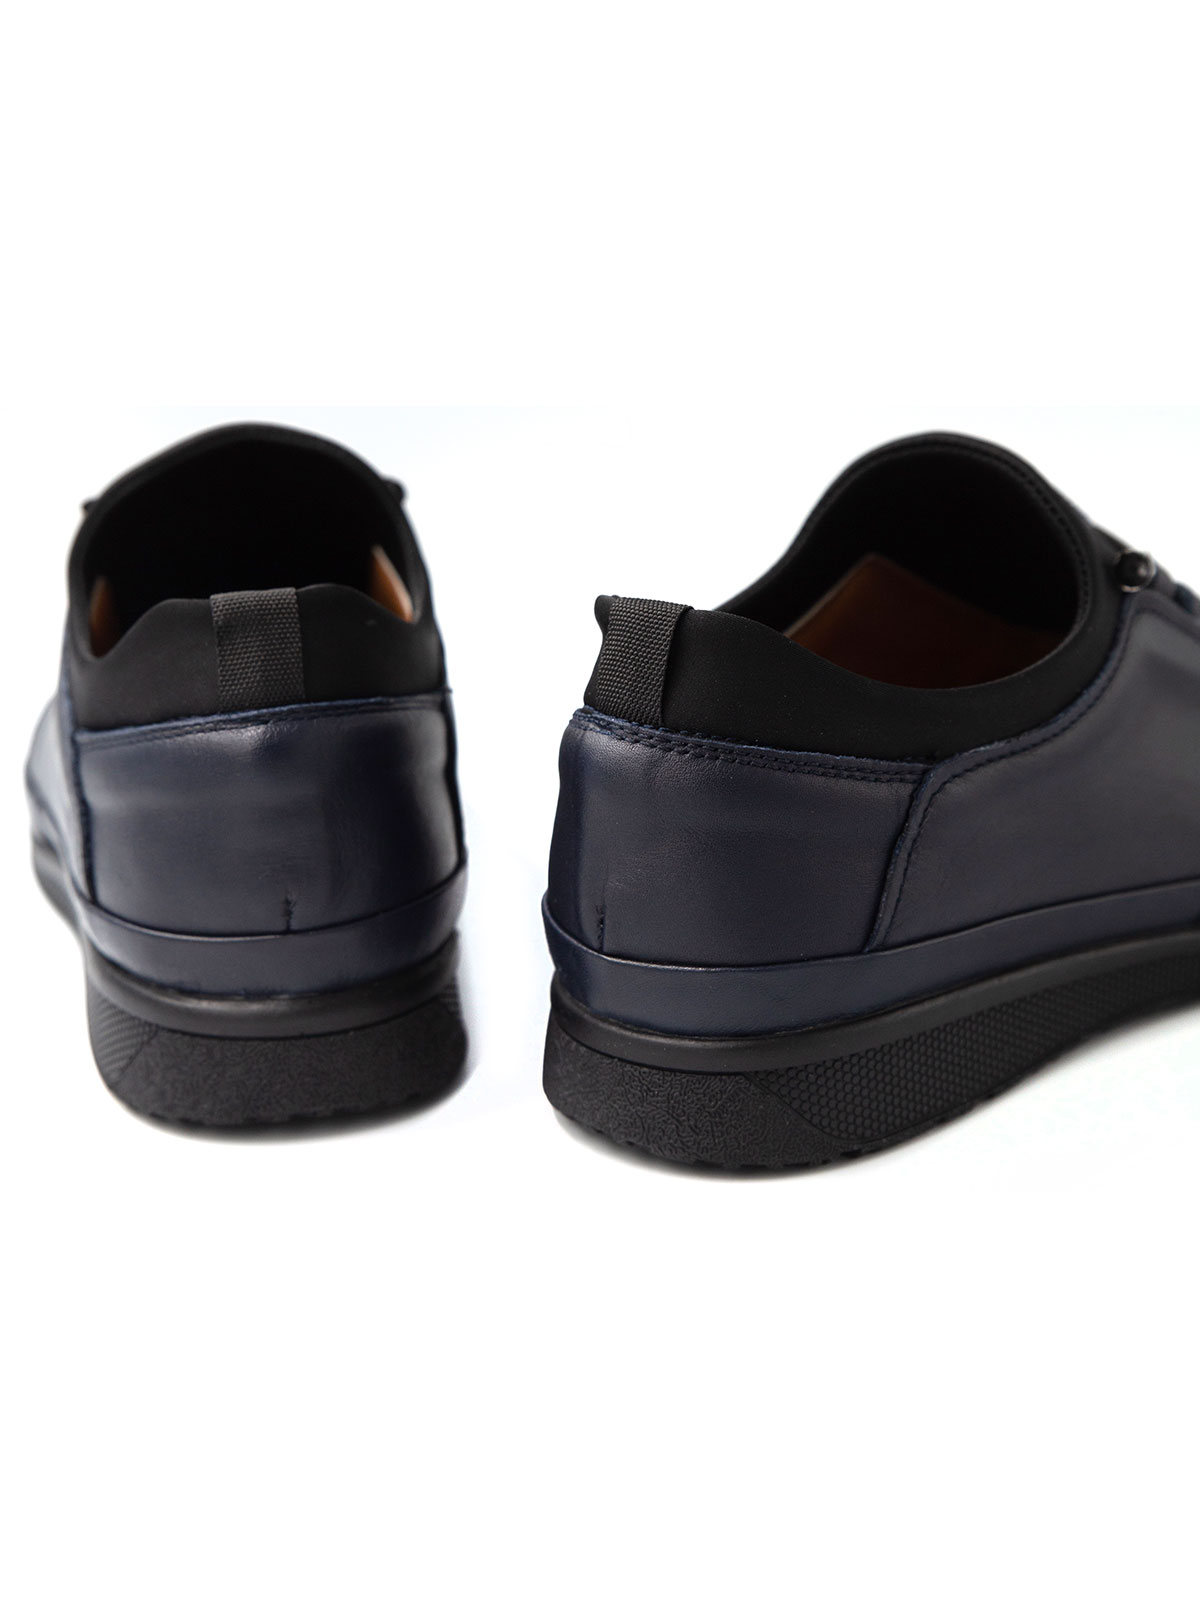 Pantofi din piele cu material textil - 81096 - € 41.62 img4